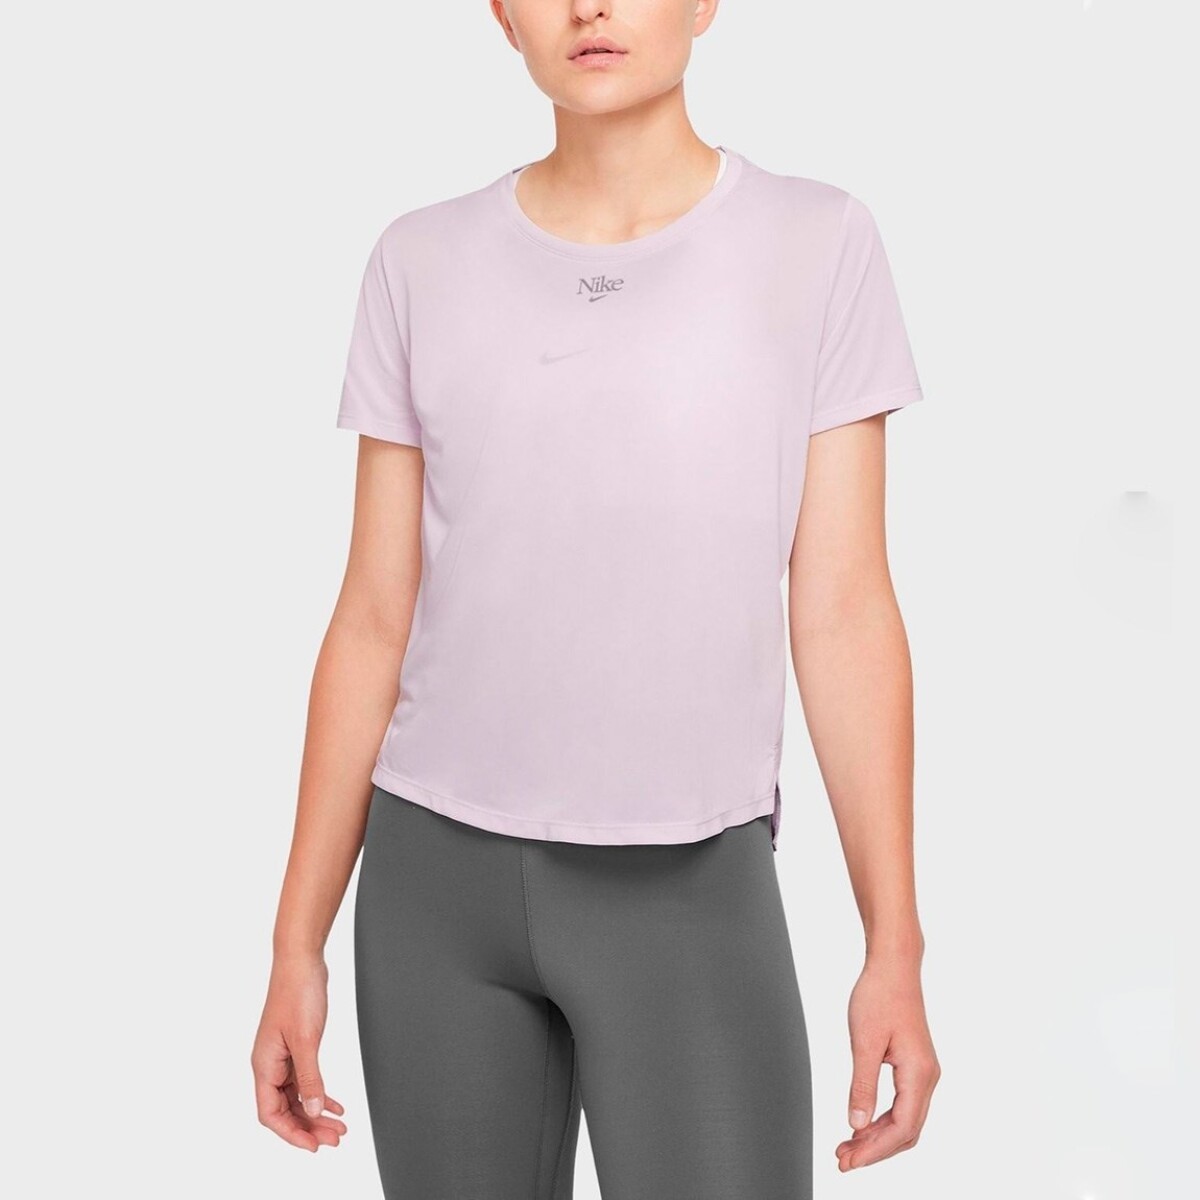 Remera Nike Running Dama One Feme Violeta - Color Único 